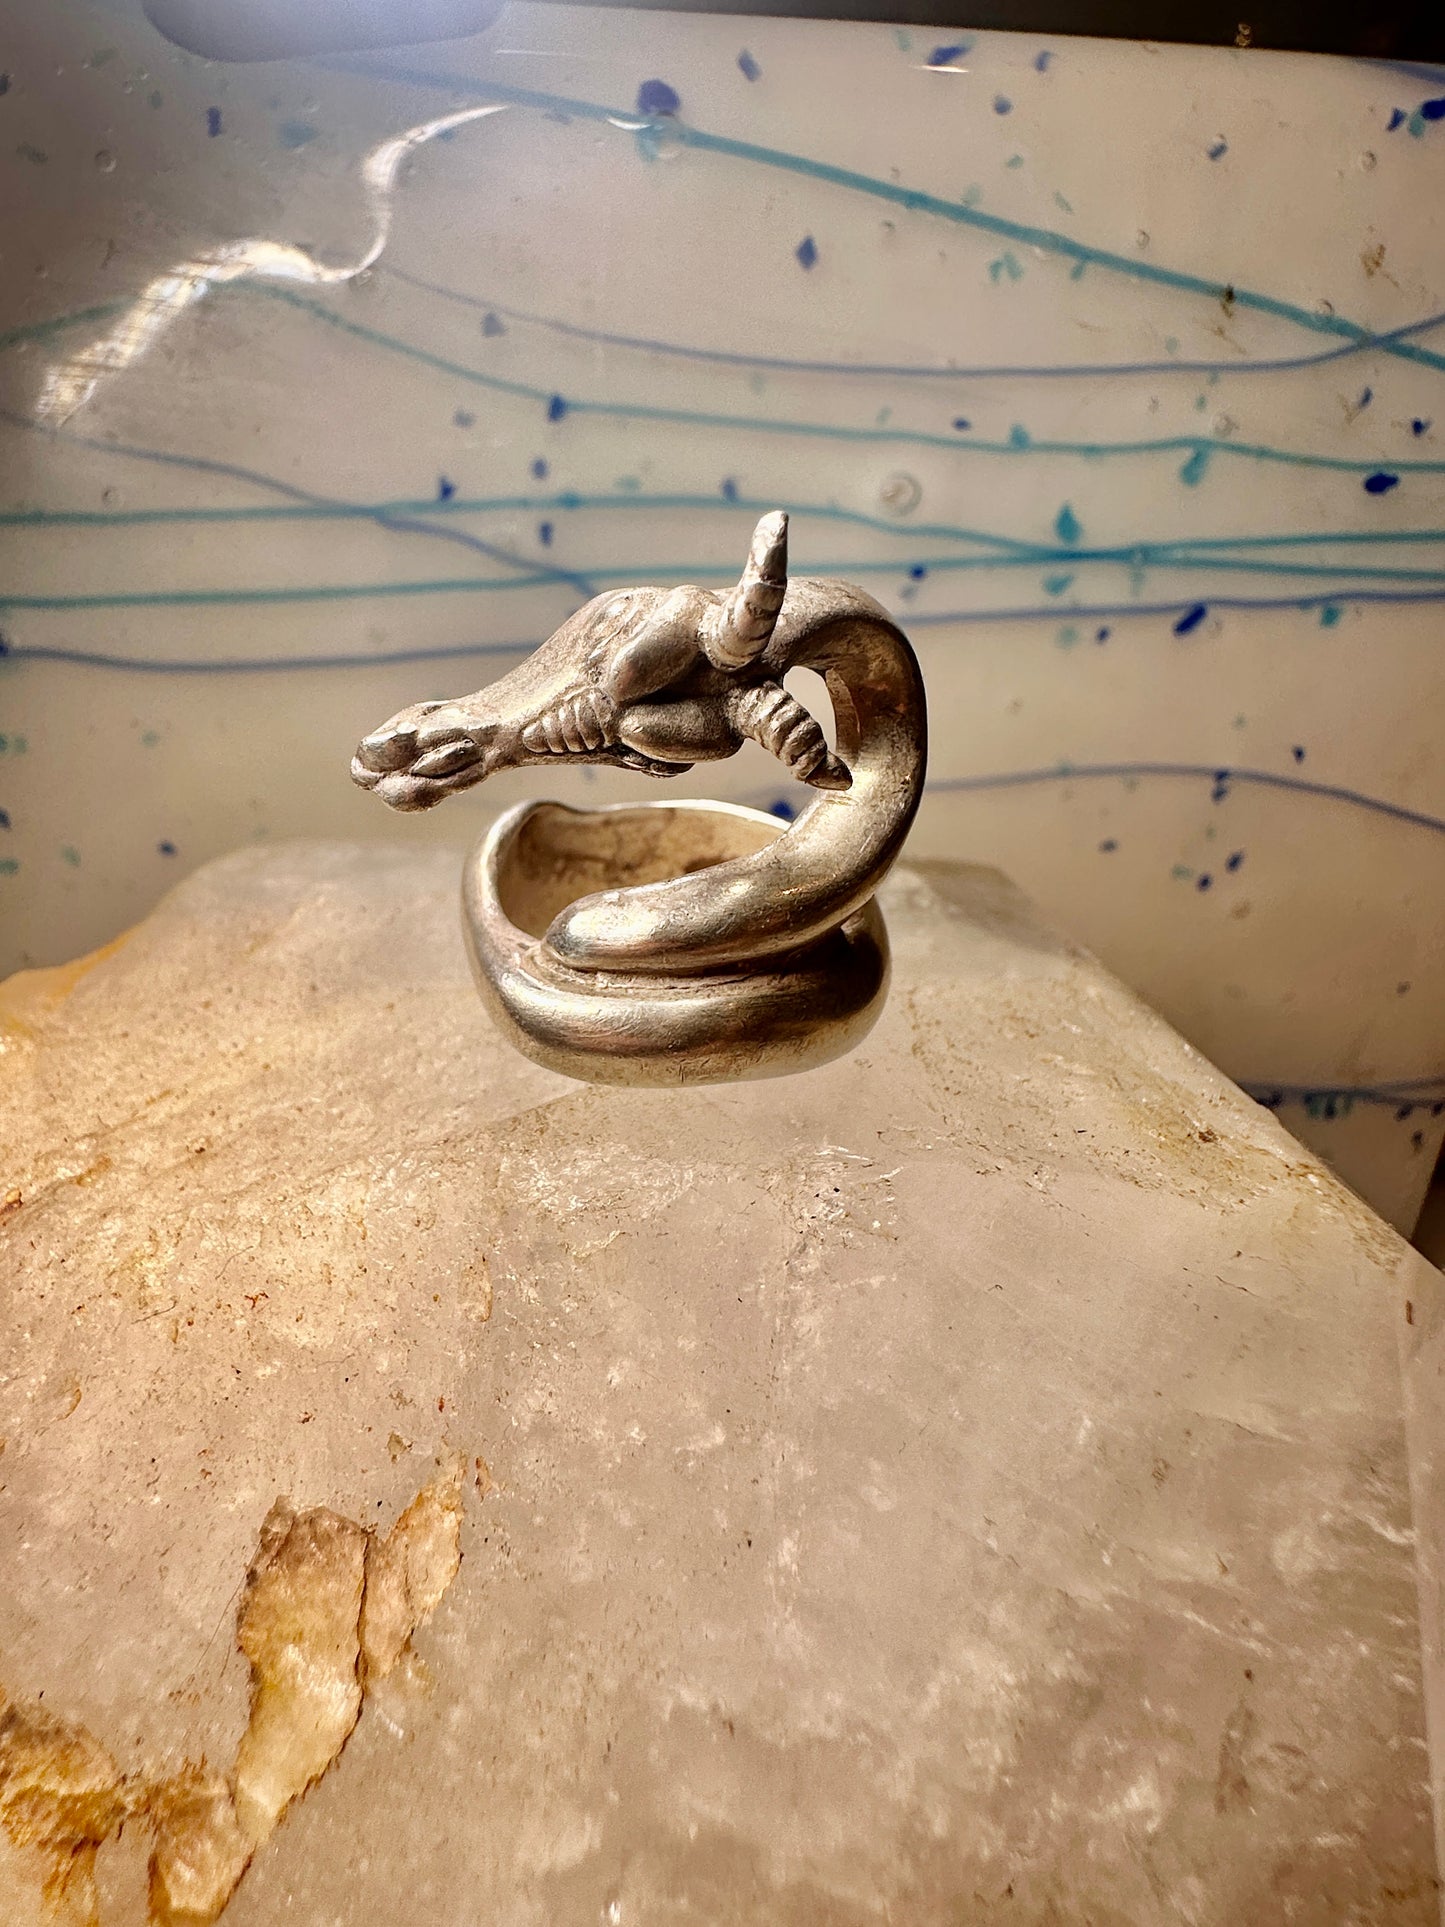 Dragon ring James Yesberger size 6.25 sterling silver women